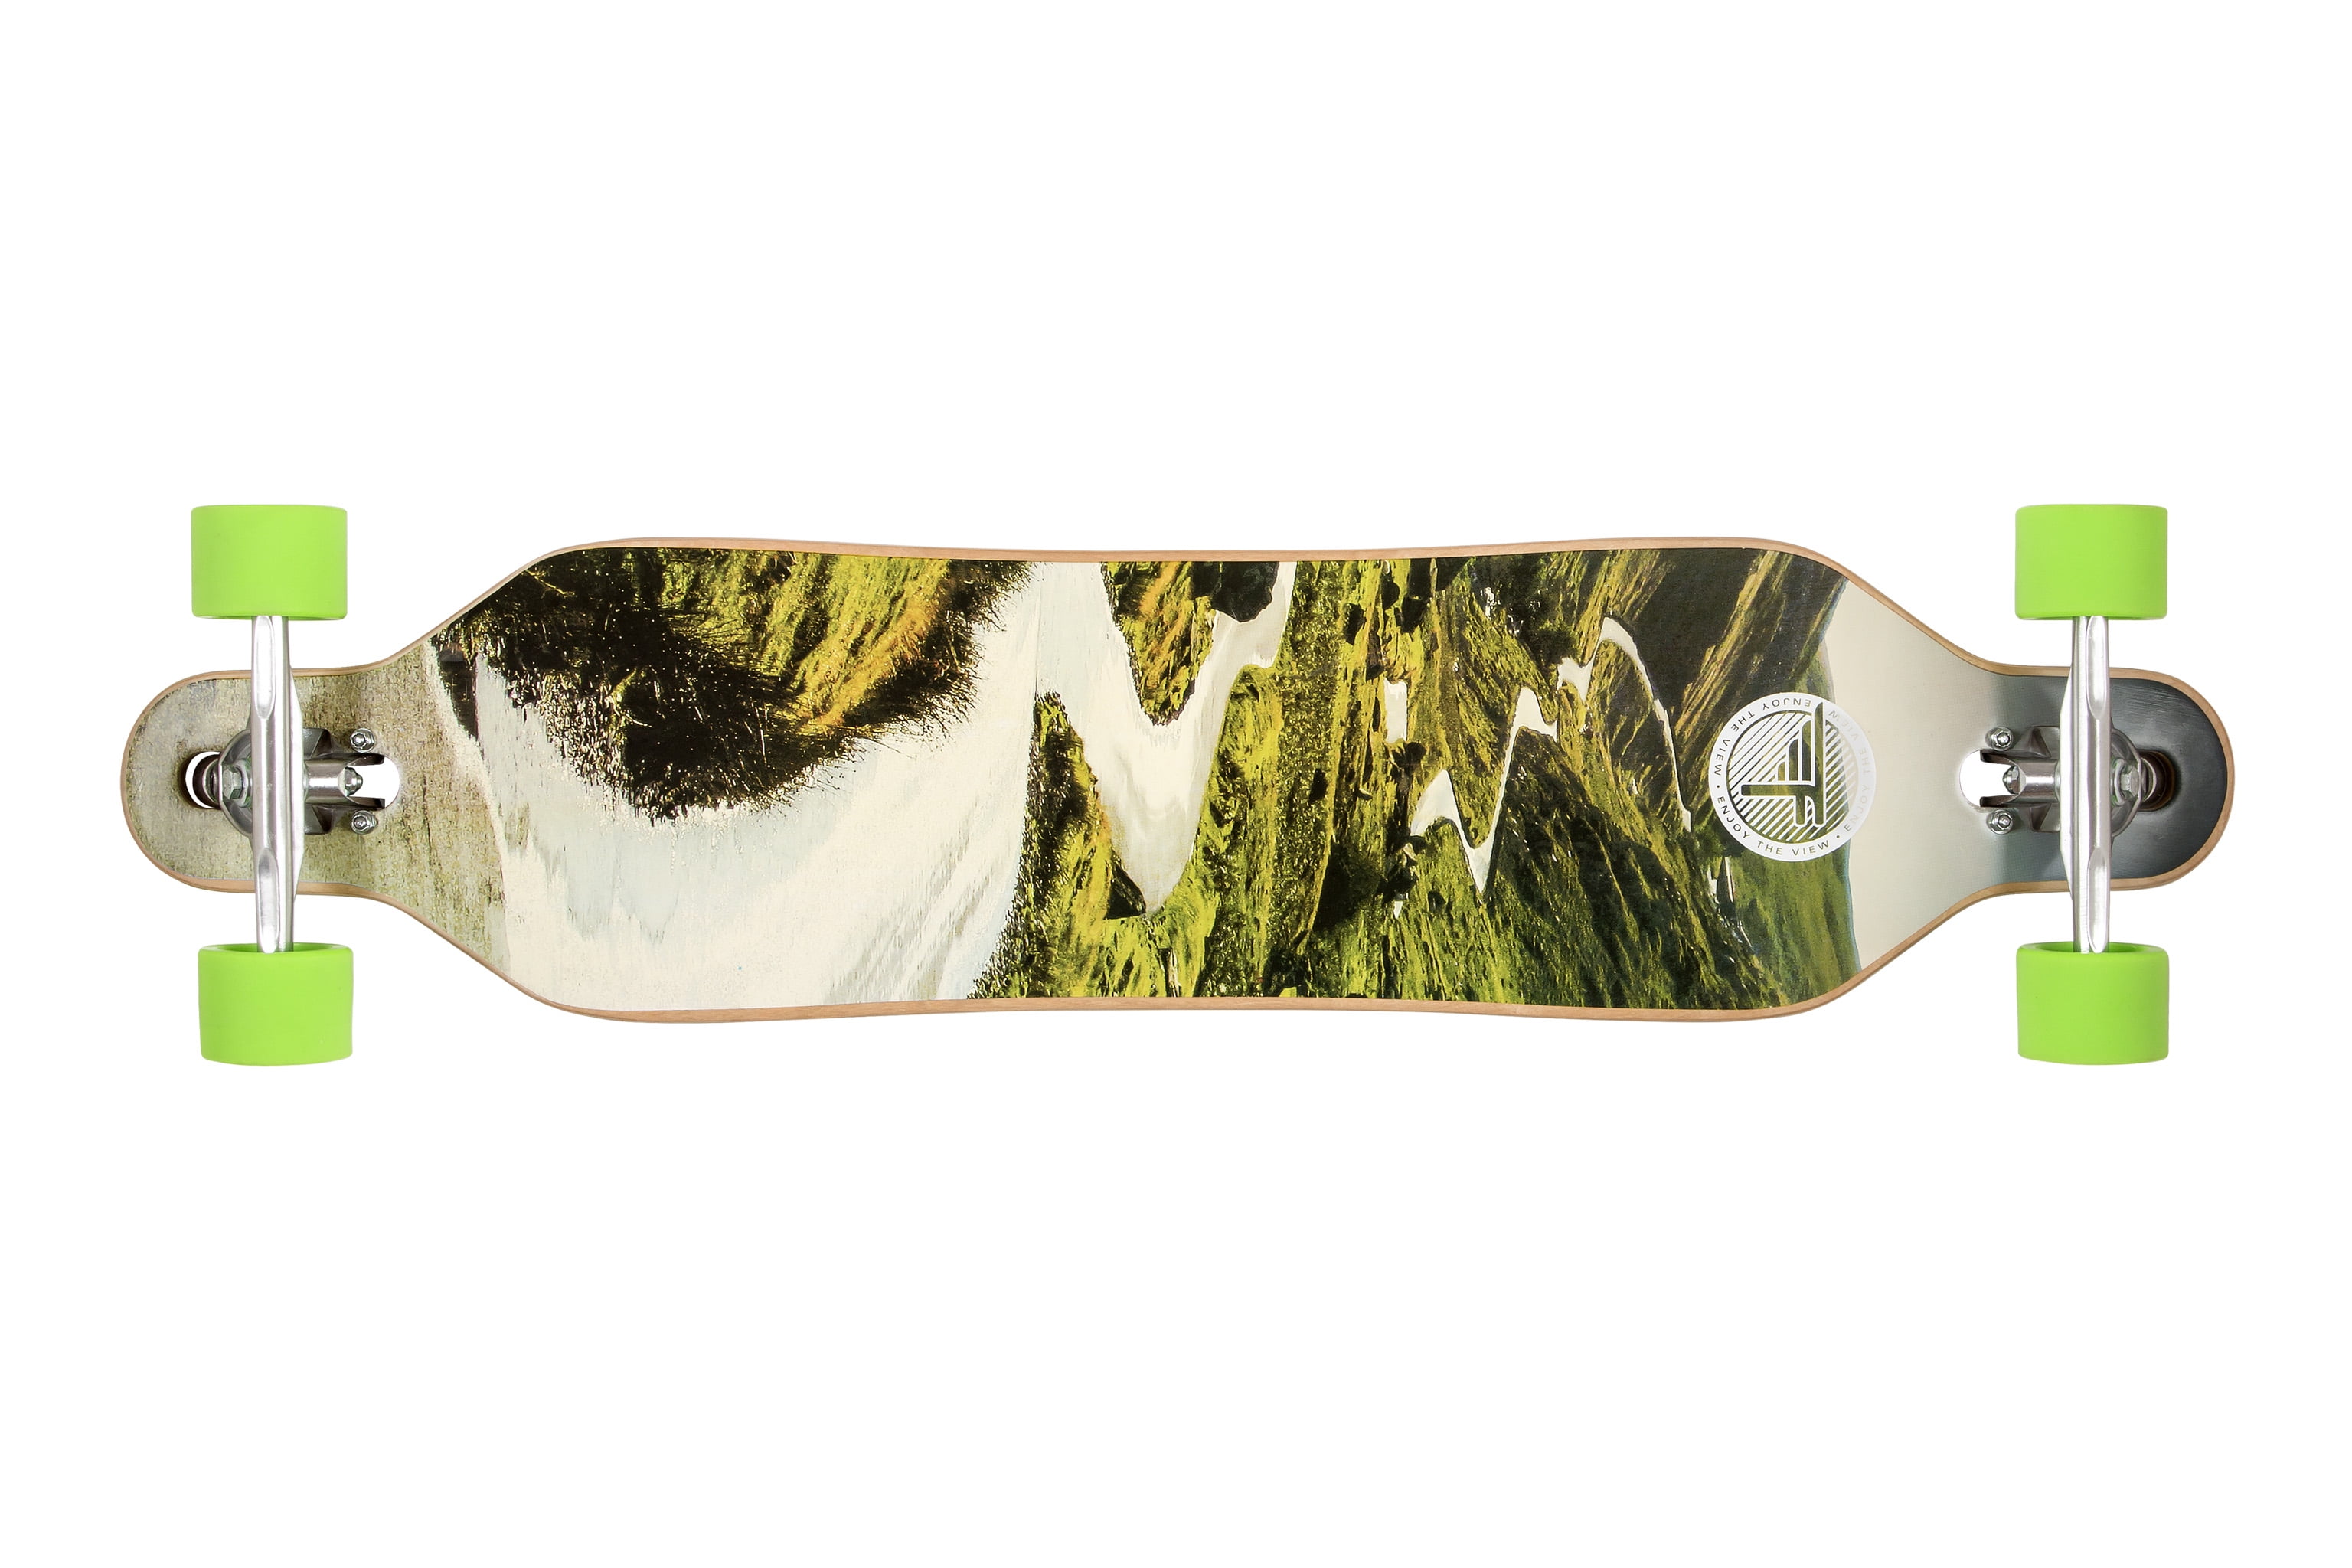 Flybar Twin Tip Drop Through Longboard Skateboard ? 41? x 9.5? - Downhill Walmart.com